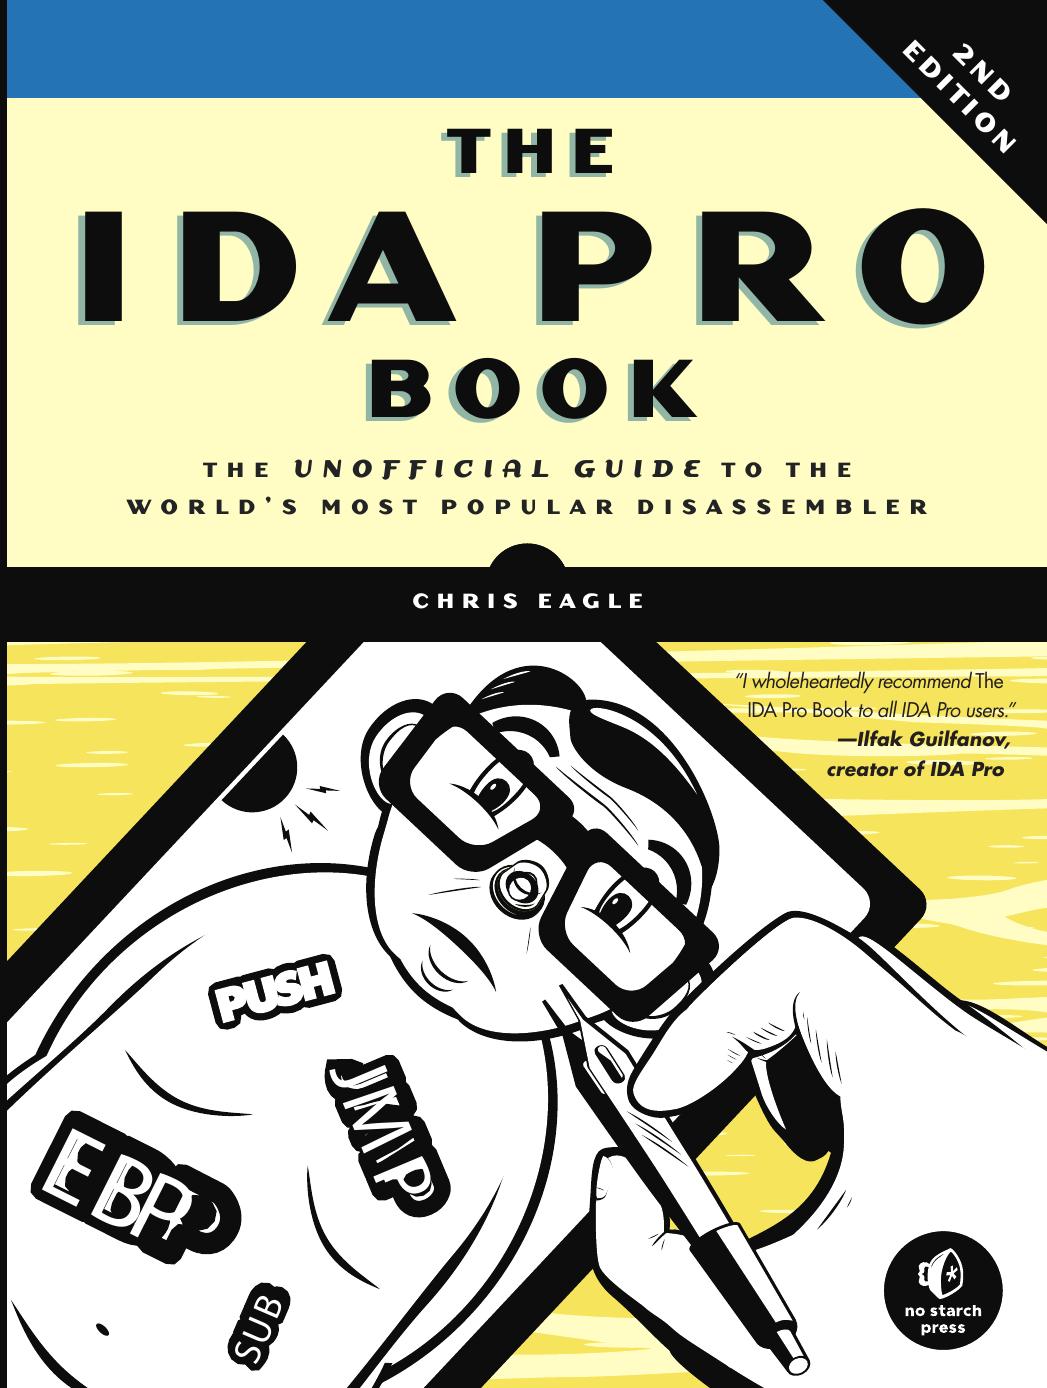 THE IDA PRO BOOK